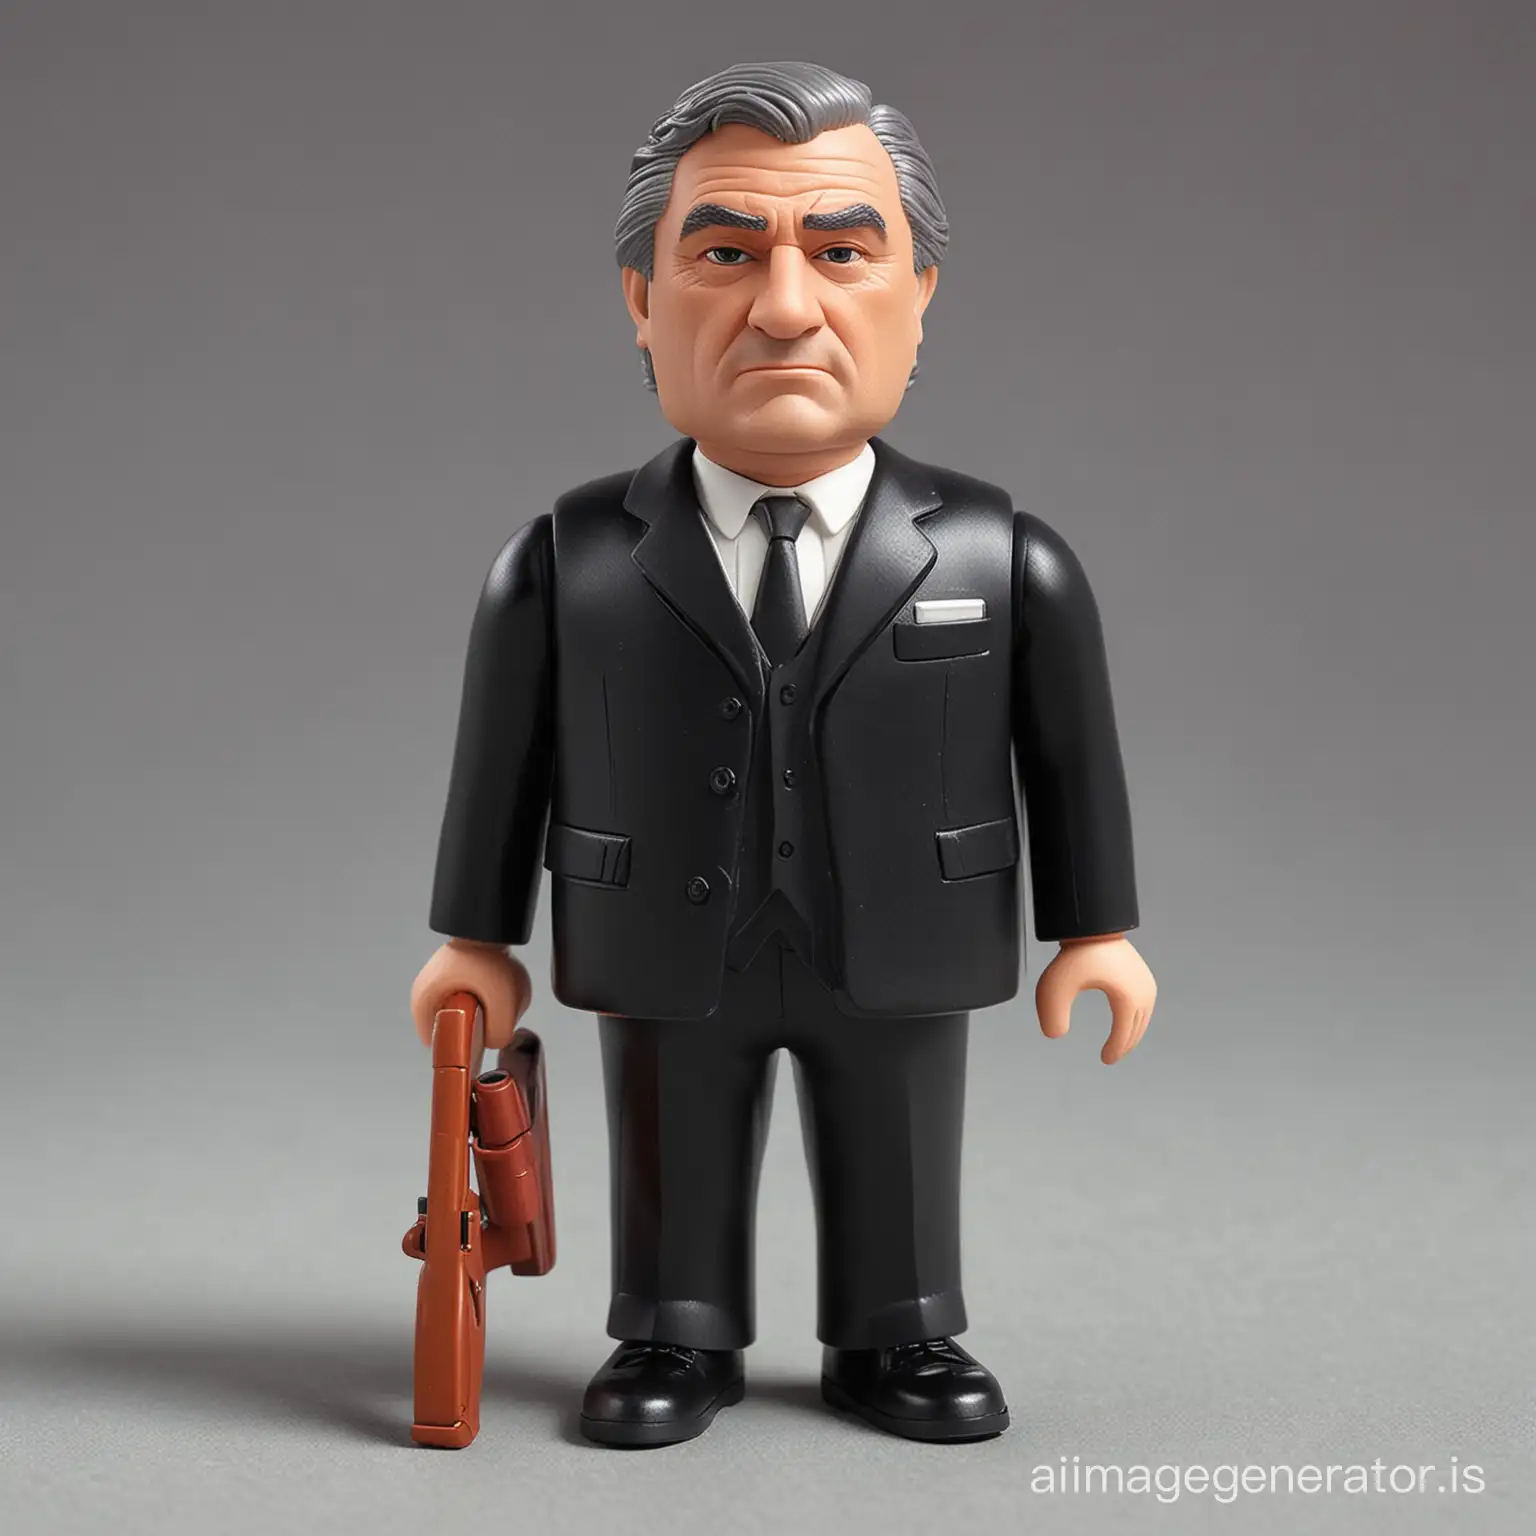 Robert-De-Niro-Playmobil-Character-Iconic-Actor-Immortalized-in-Miniature-Form